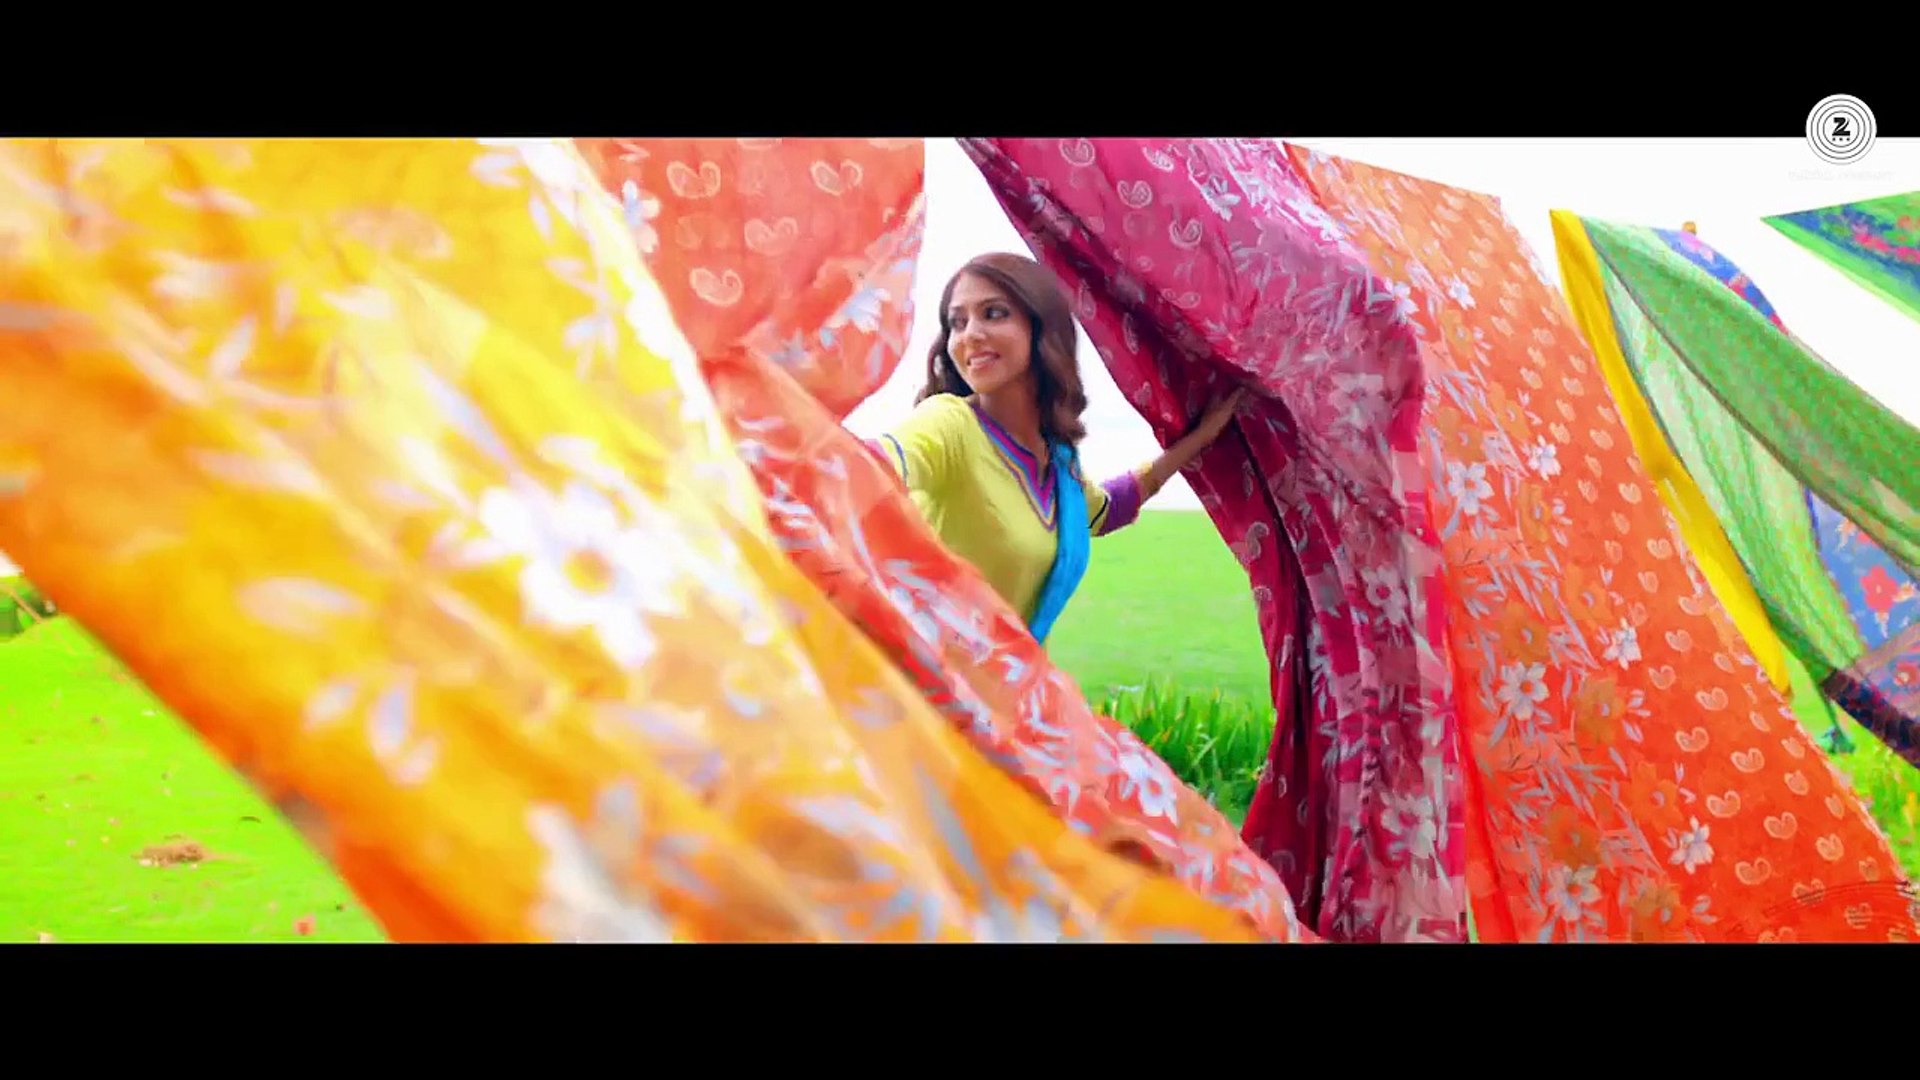 Guddu Ki Gun - Full HD Hindi Movie Trailer [2015]